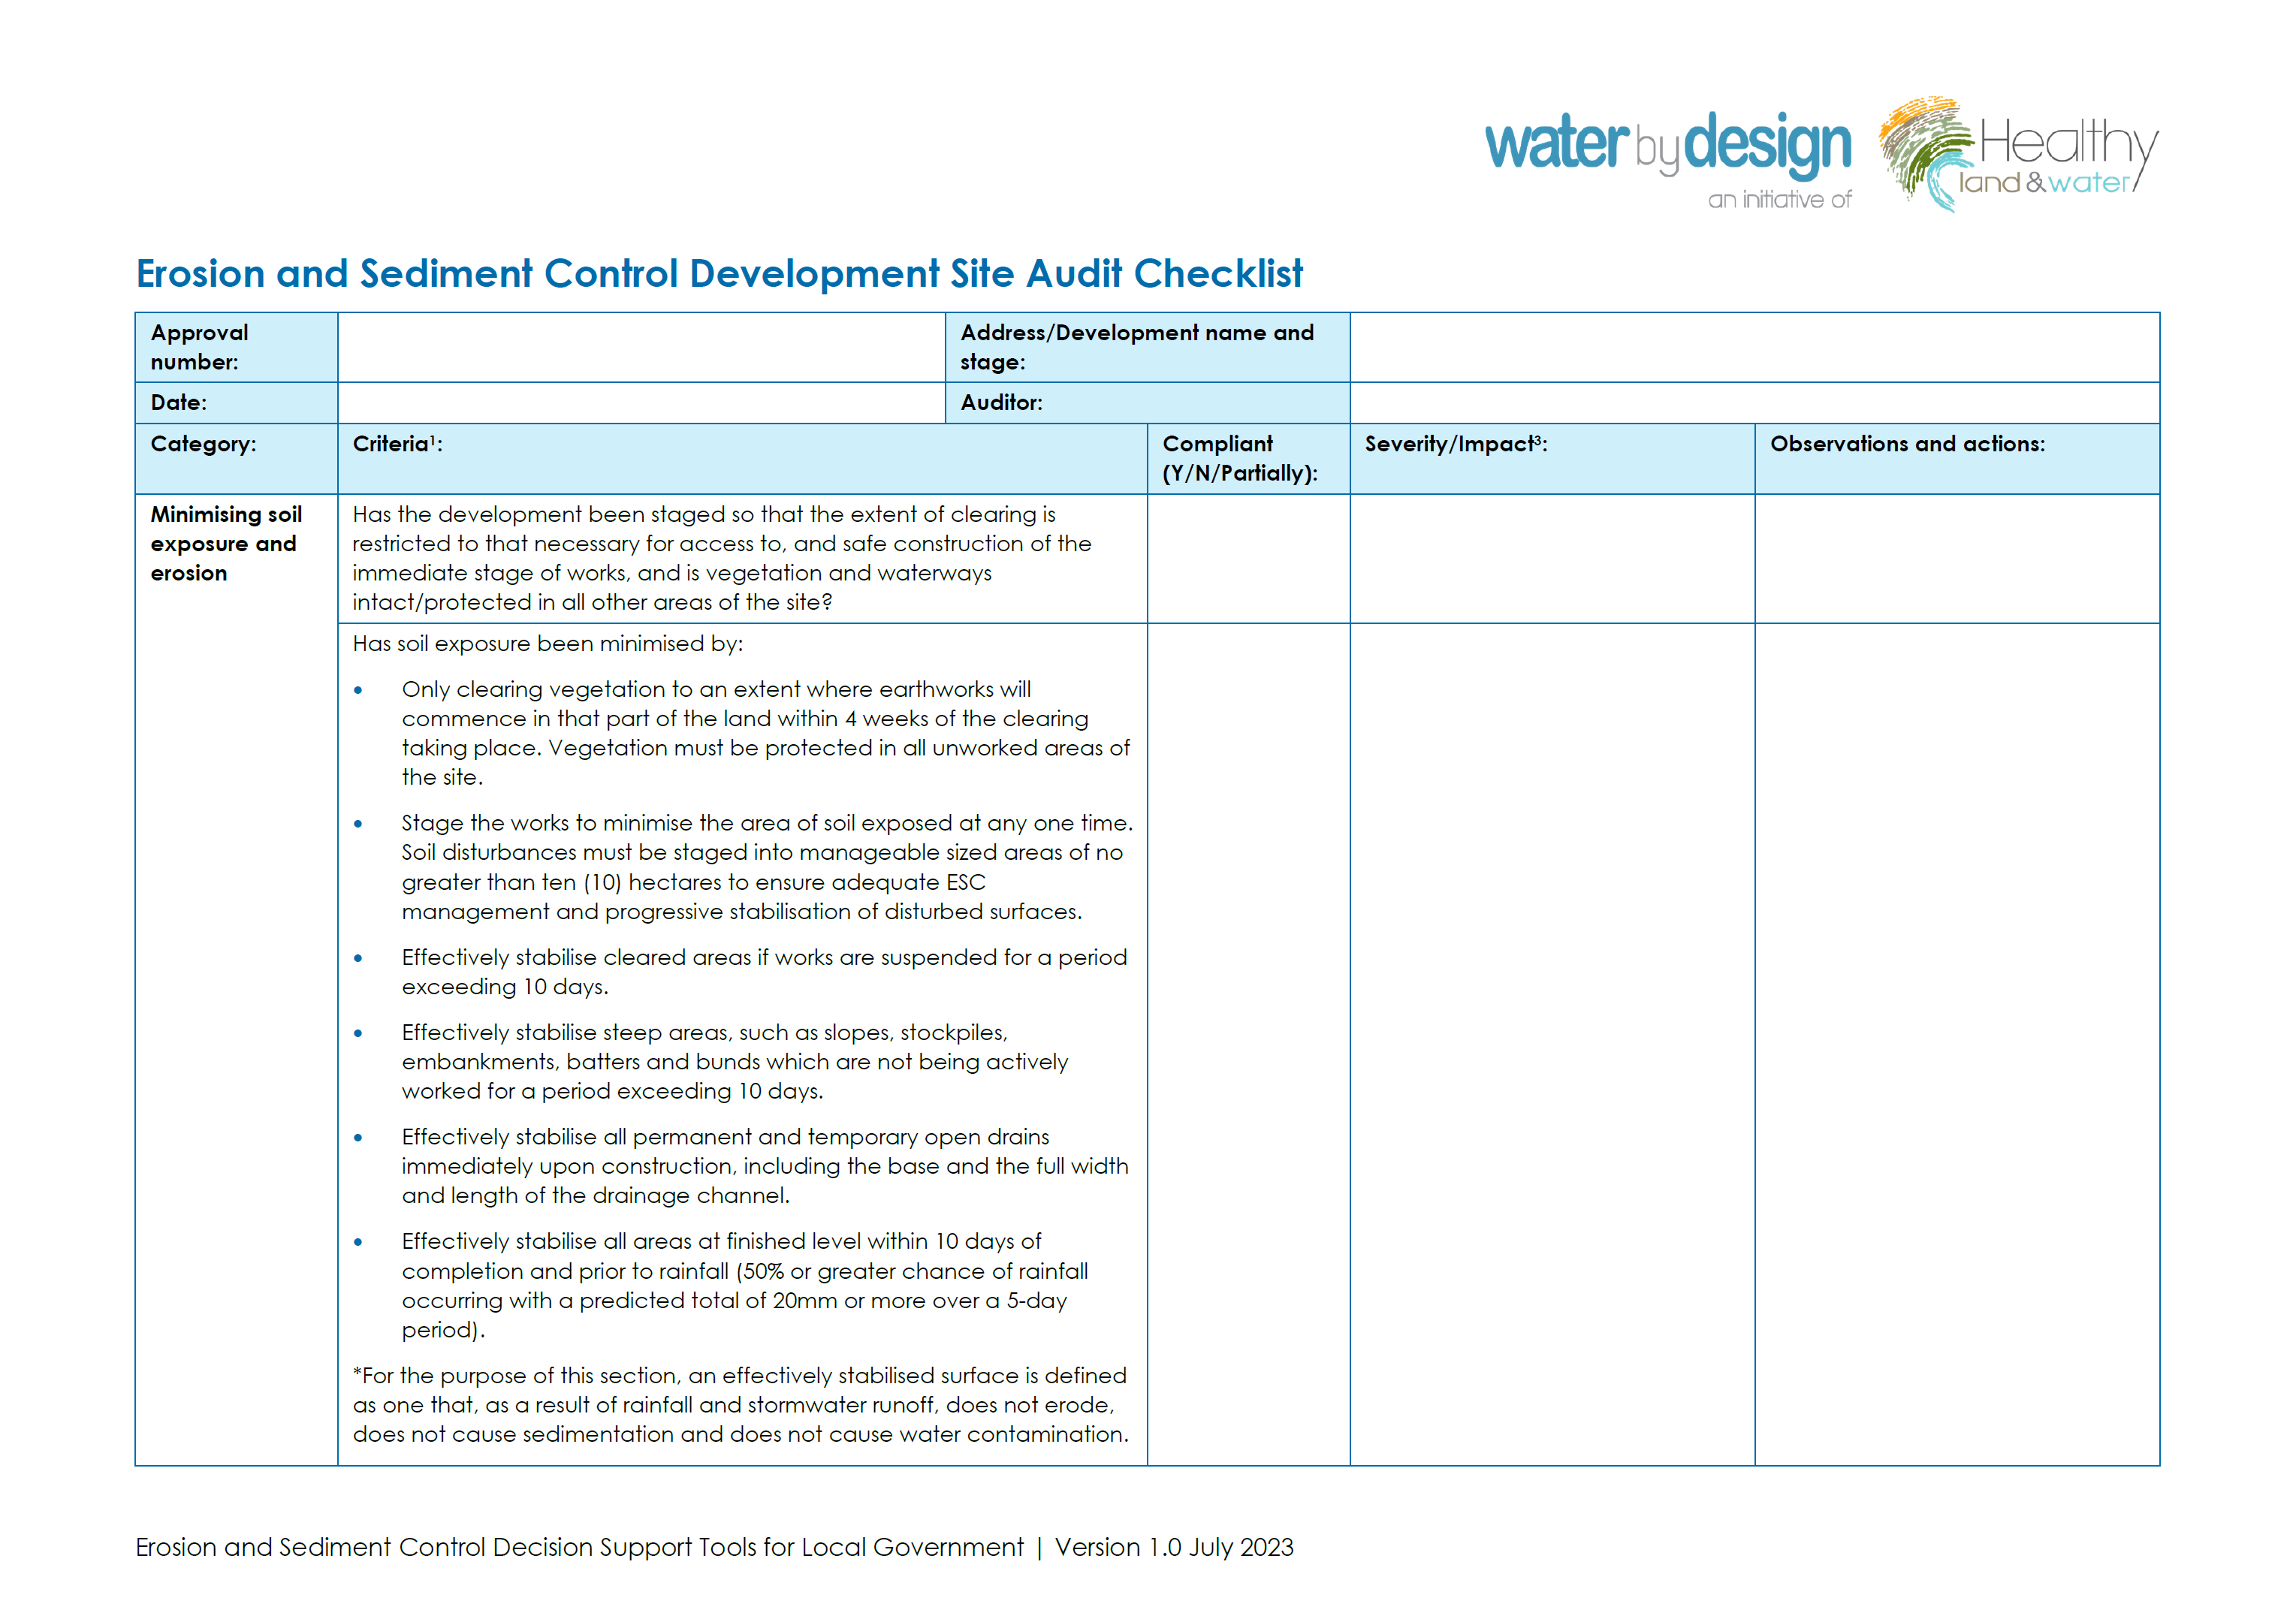 Erosion and Sediment Control Development Site Audit Checklist (2023)